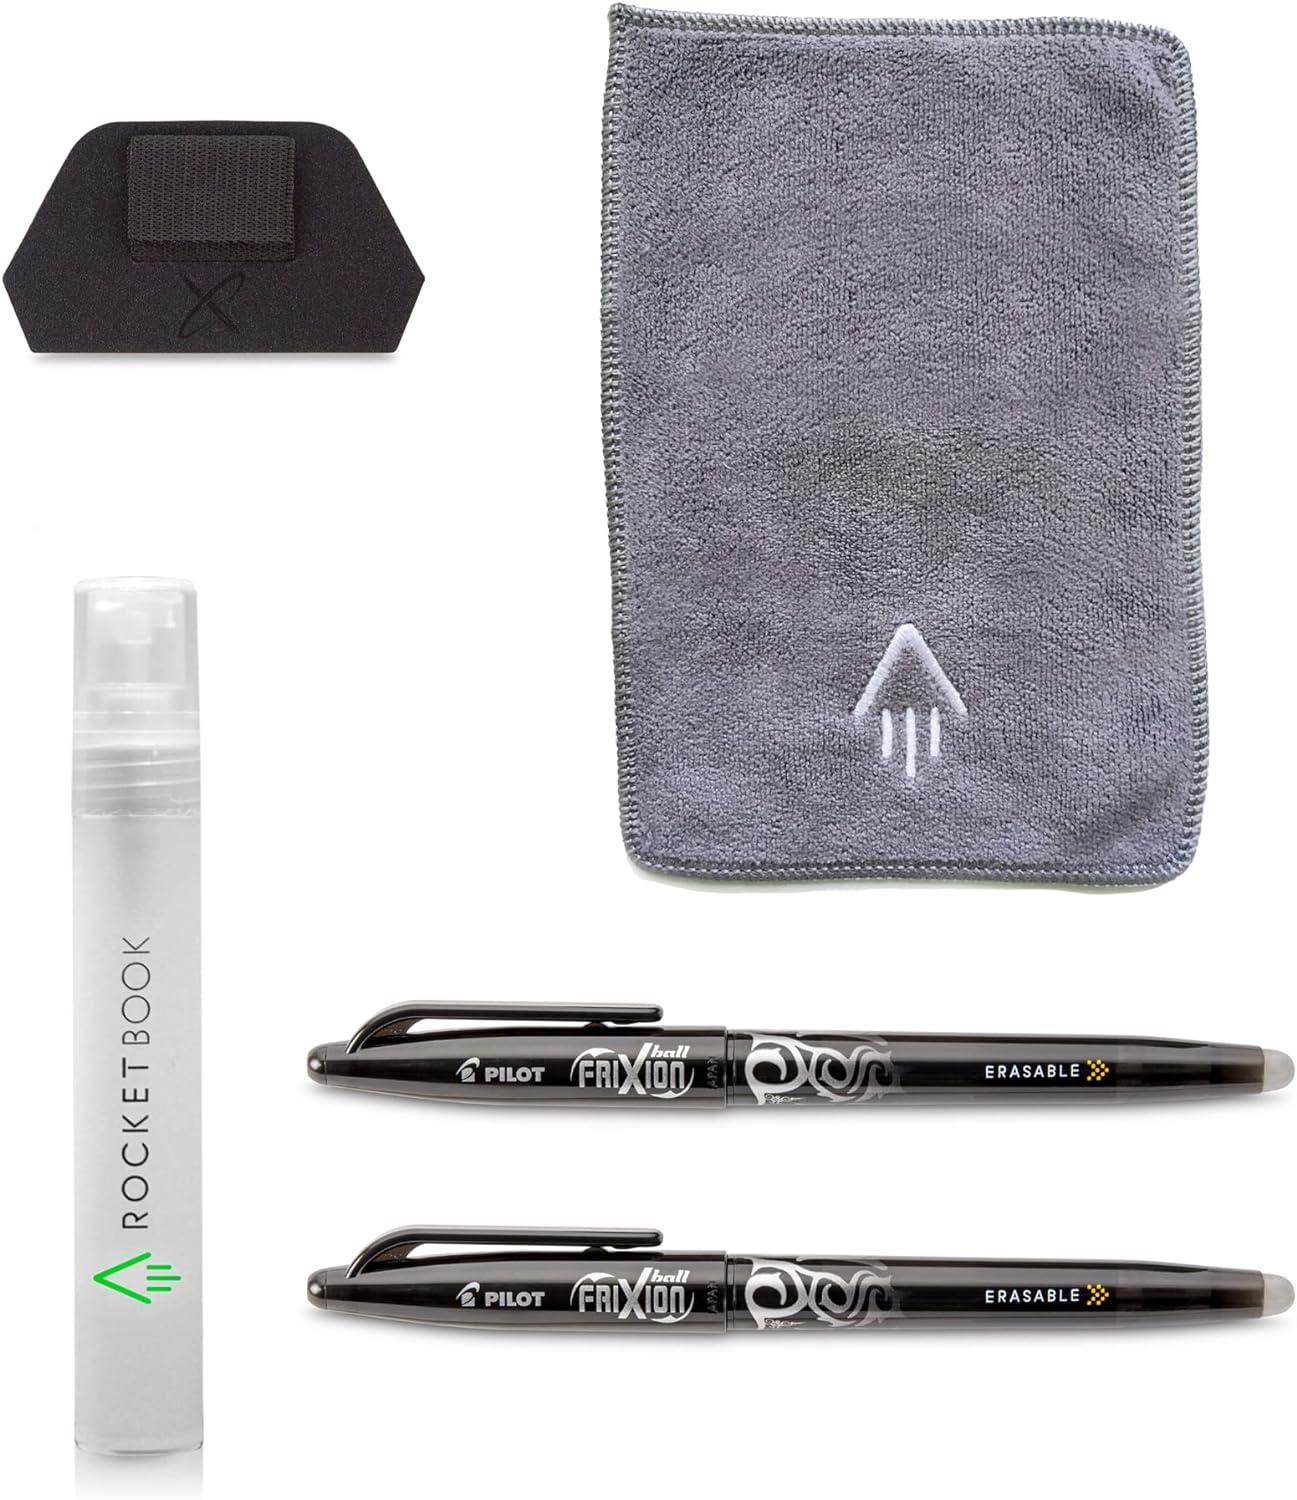 rocketbook smart notebook accessory kit 2 black capped frixion pens 1 spray bottle scan erase reuse 